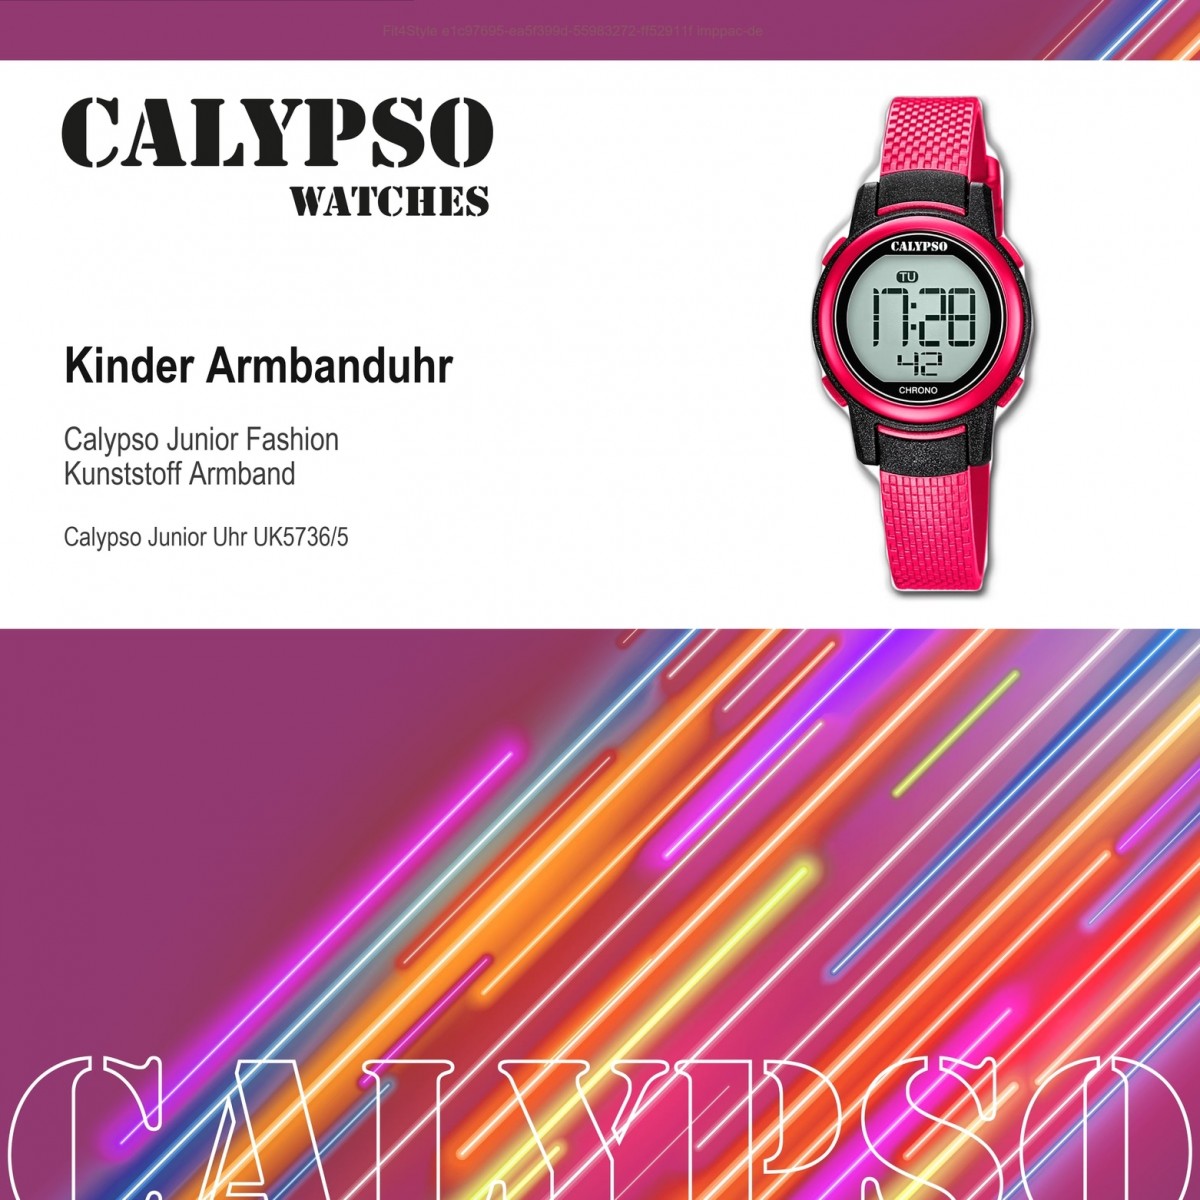 Calypso Kinder Armbanduhr Digital K5736/5 pink Quarz-Uhr UK5736/5 Crush PU